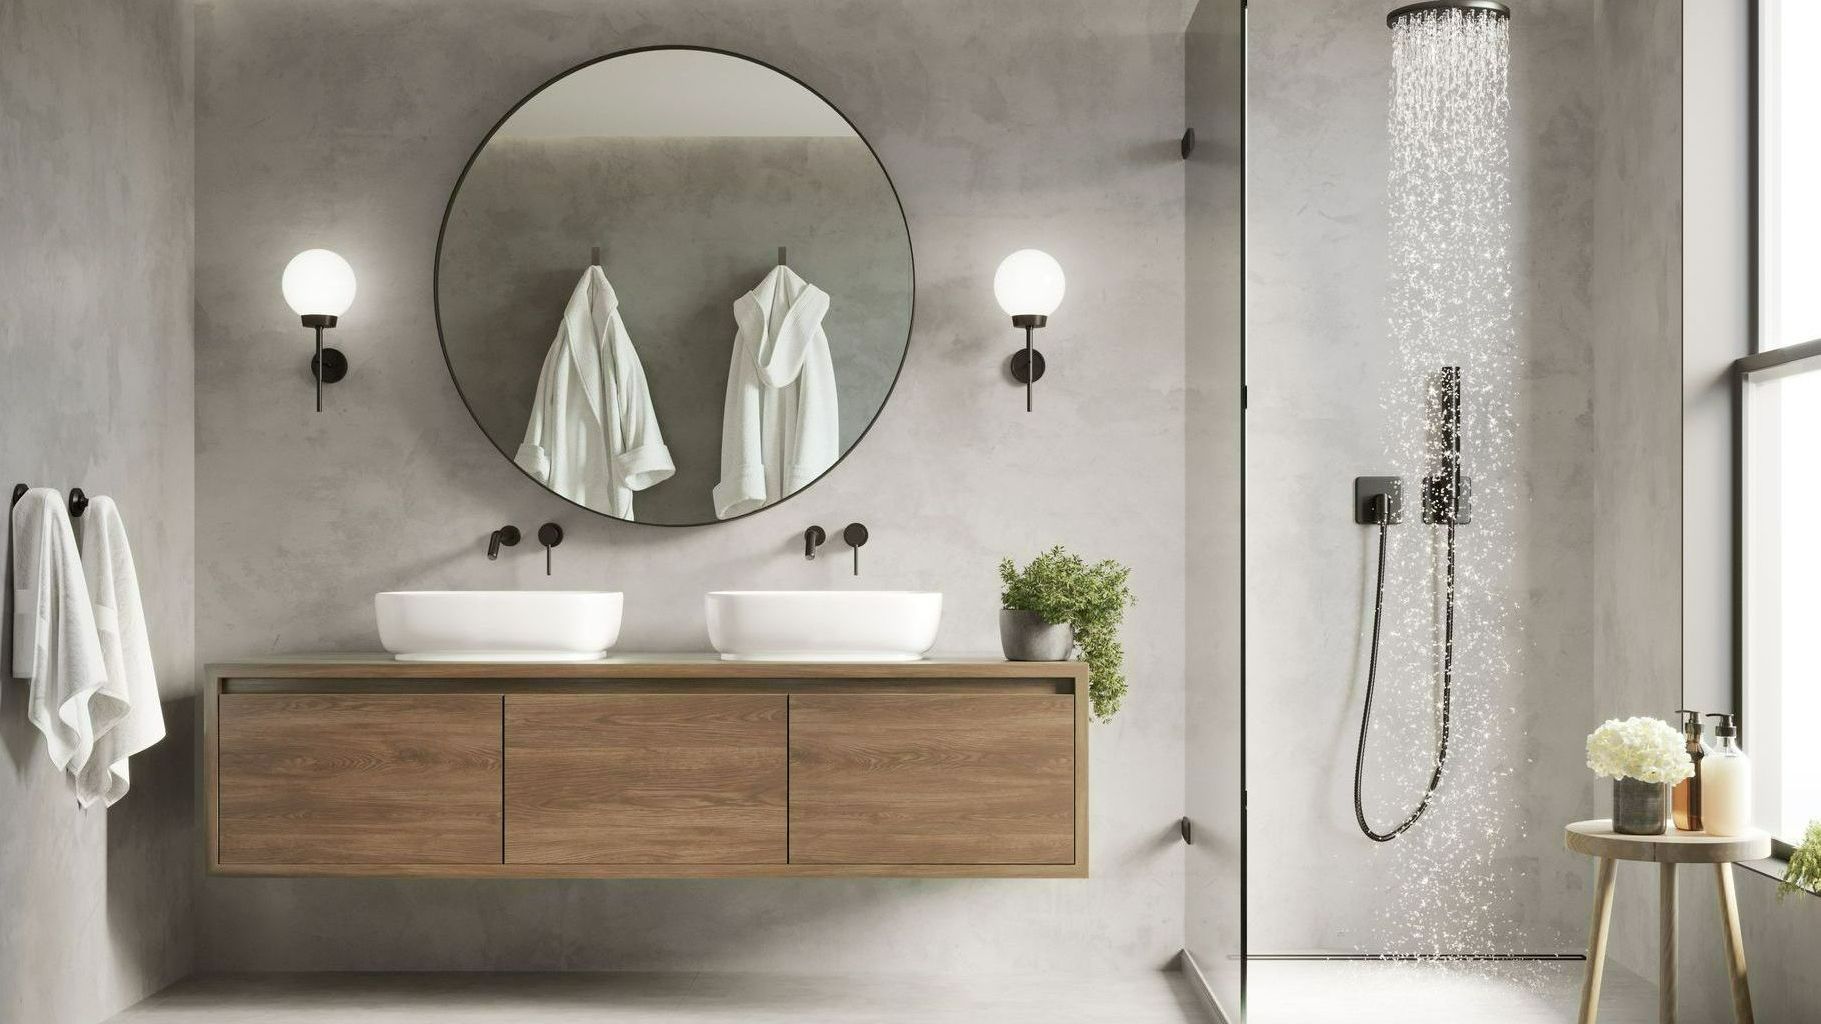 Salle de bain moderne avec meubles en bois